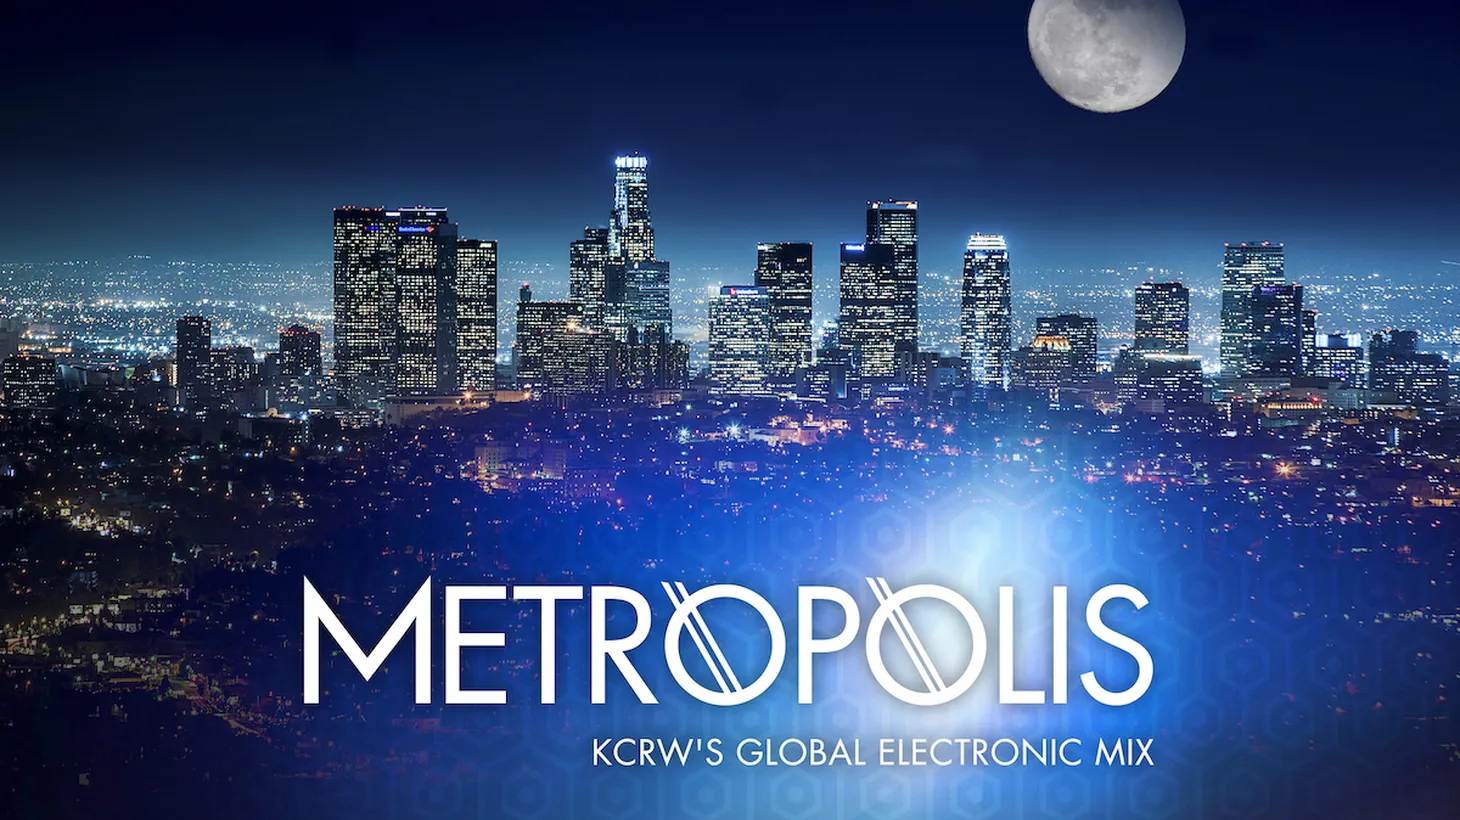 Metropolis playlist, October 10, 2020.